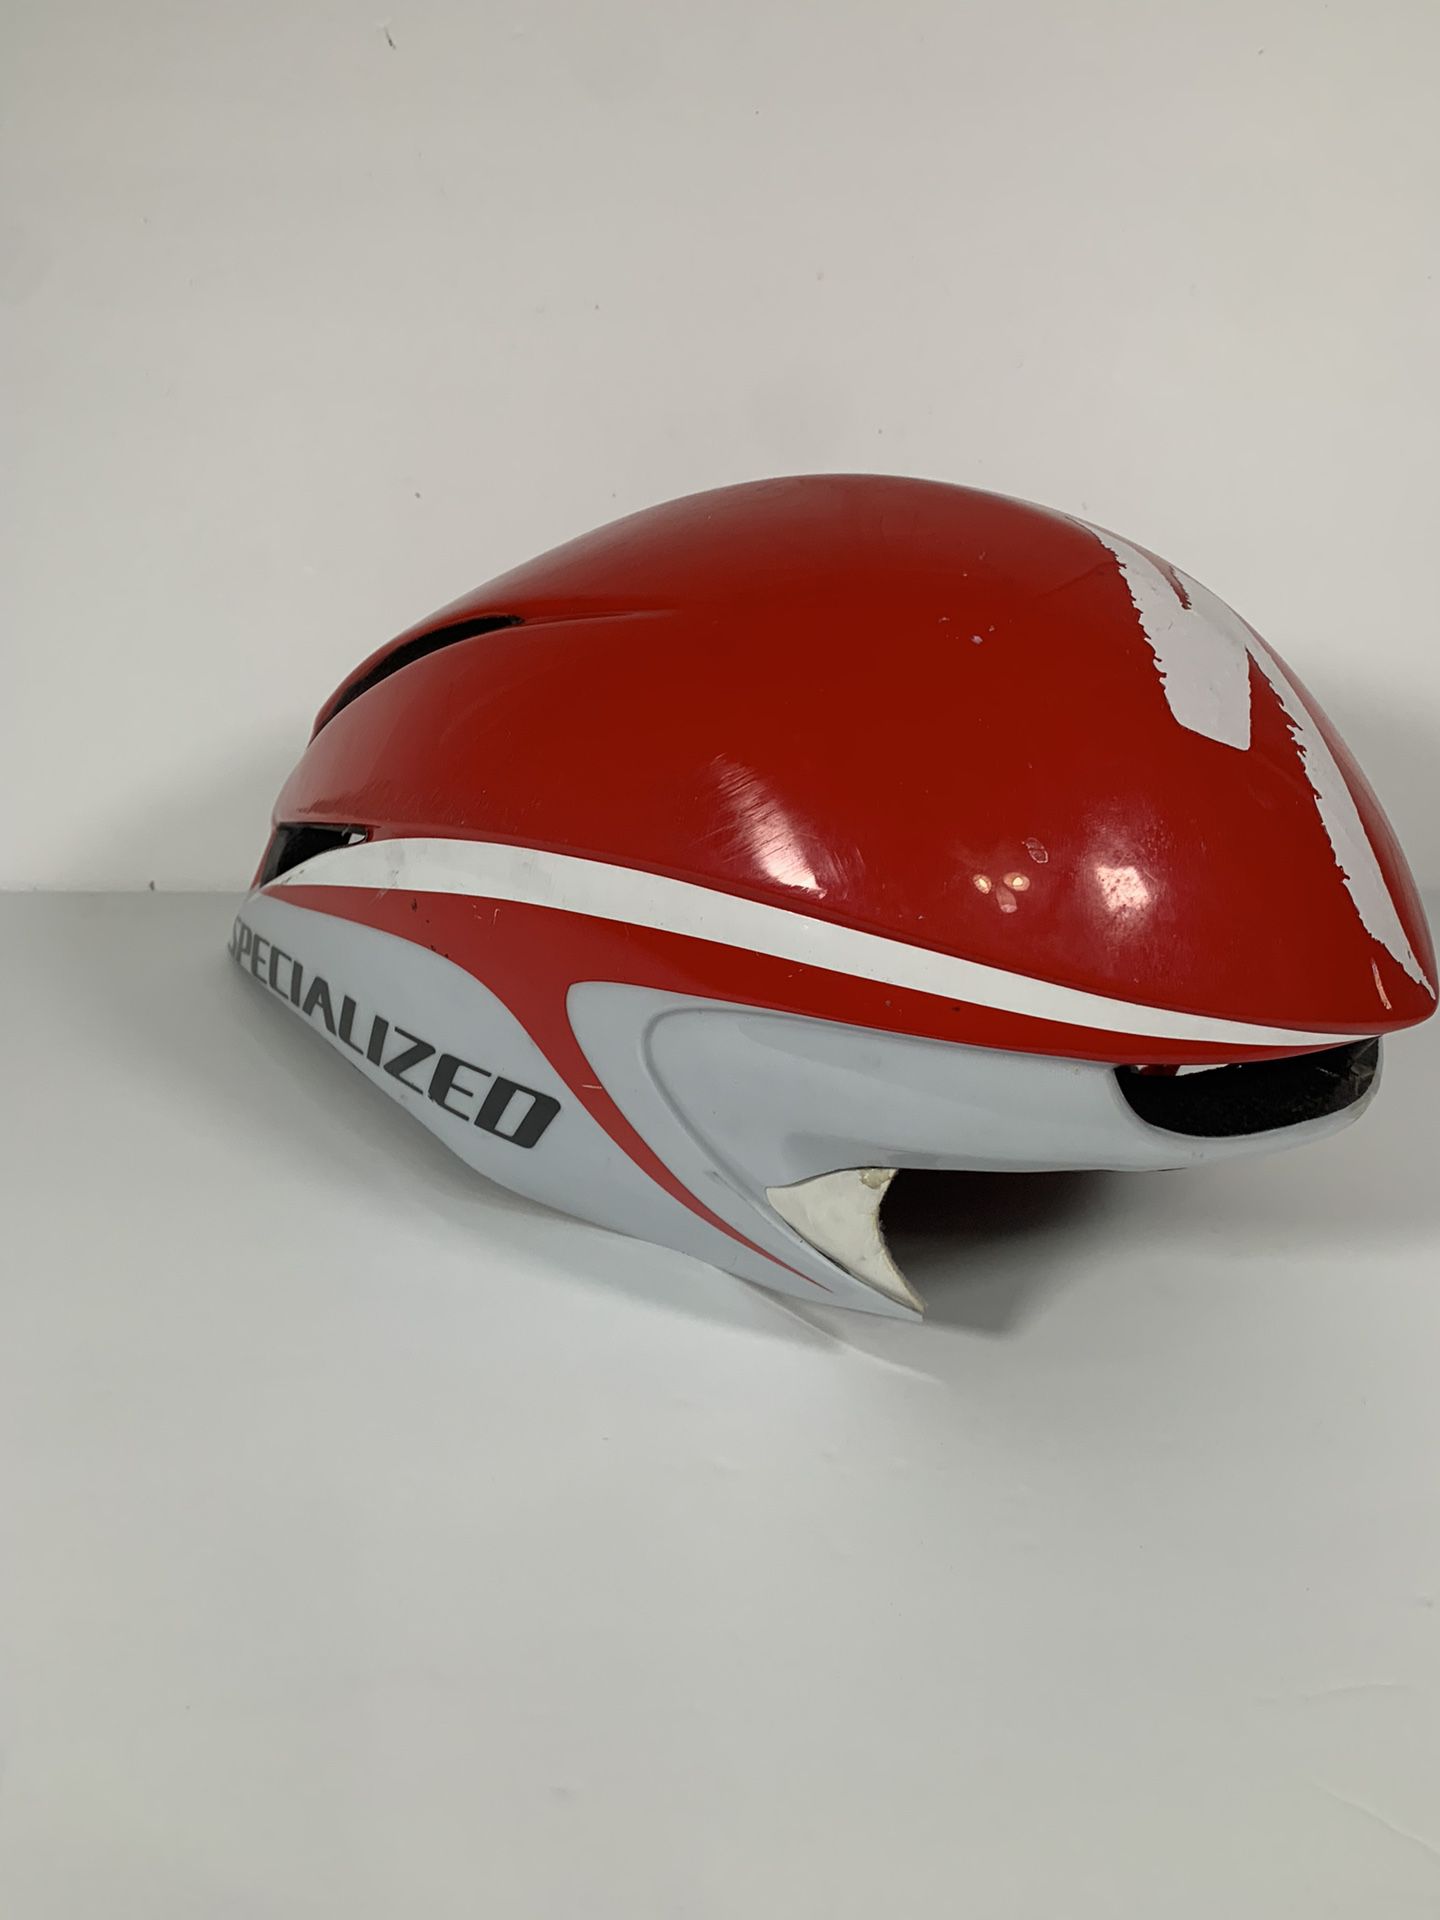 Specialized Helmet TT2 - Xs/S - 52-58cm. 400g